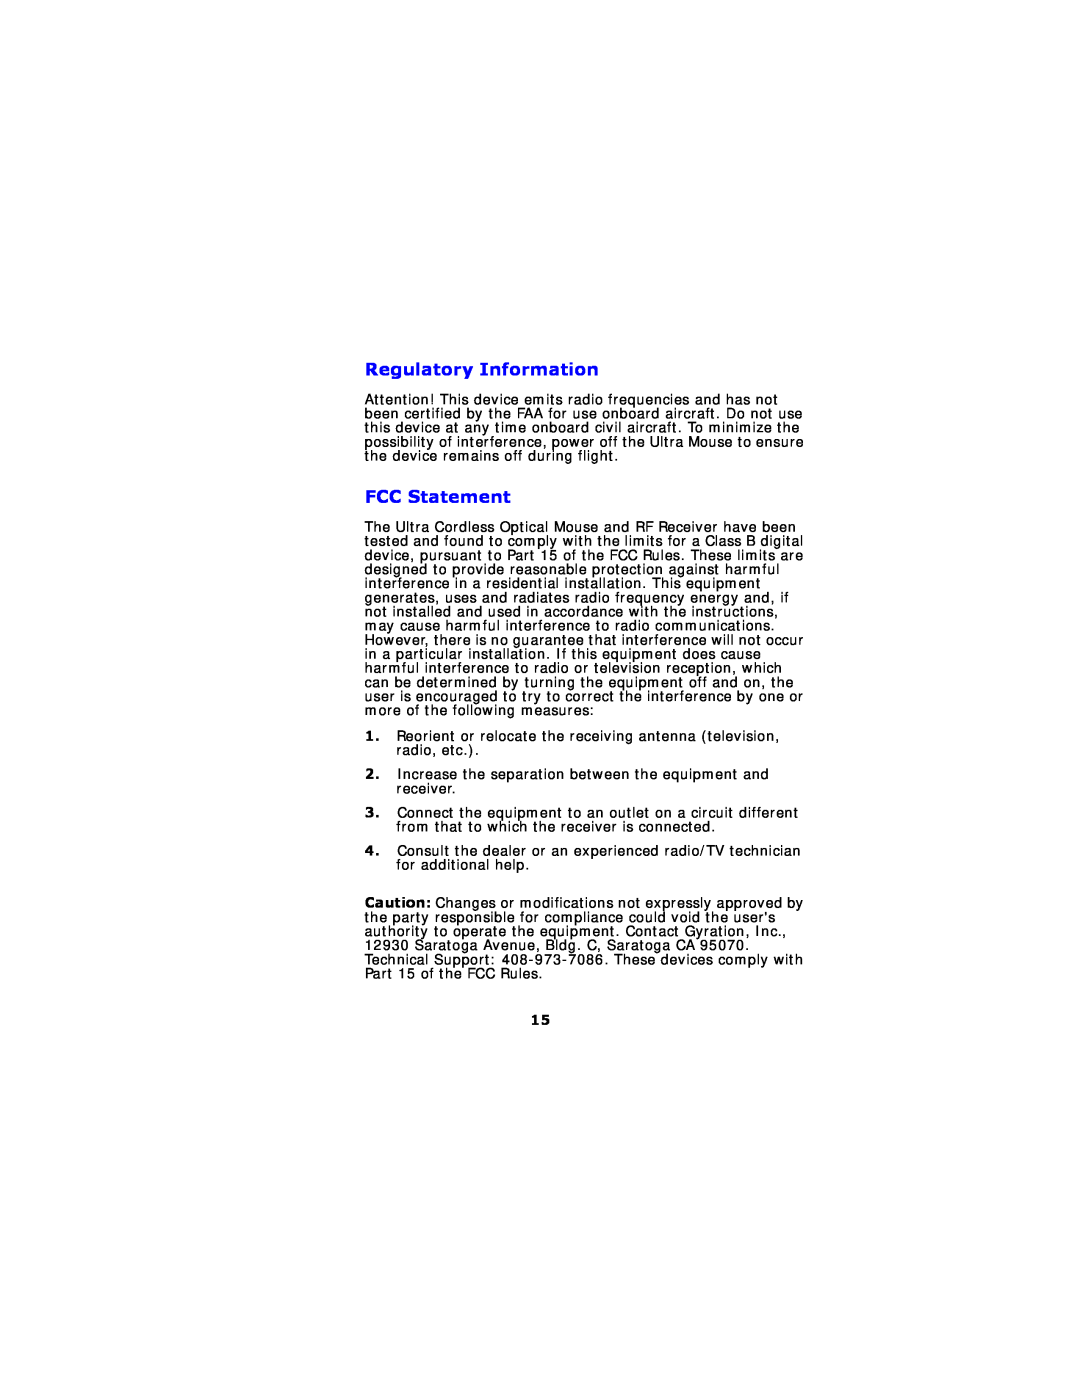 Gyration Ultra Cordless Optical Mouse user manual Regulatory Information, FCC Statement 